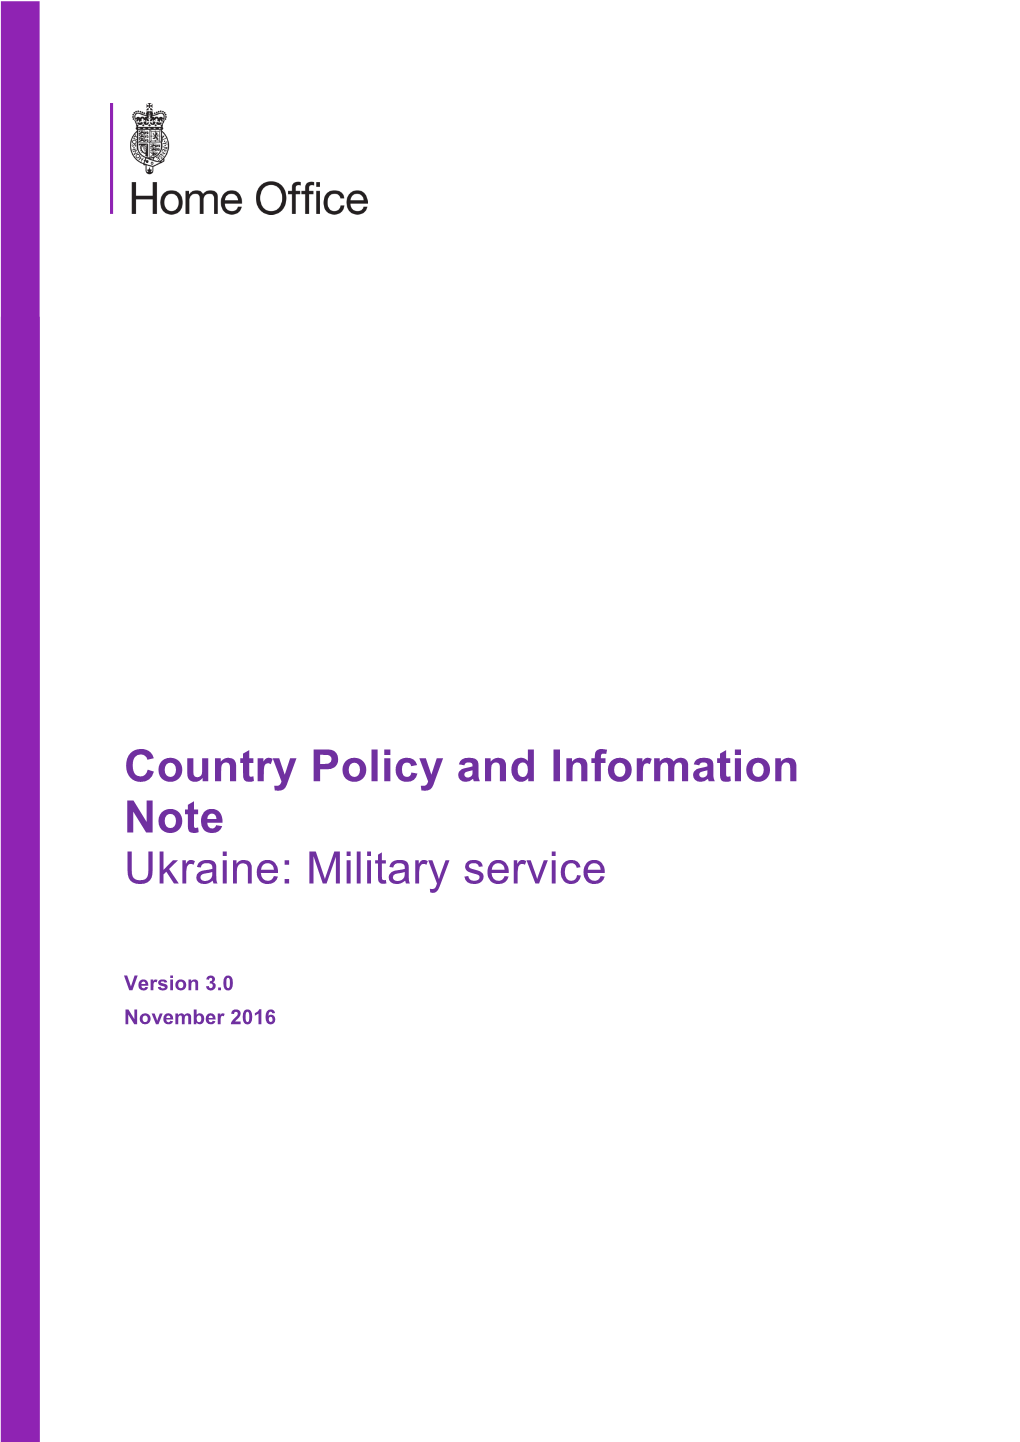 Ukraine: Military Service